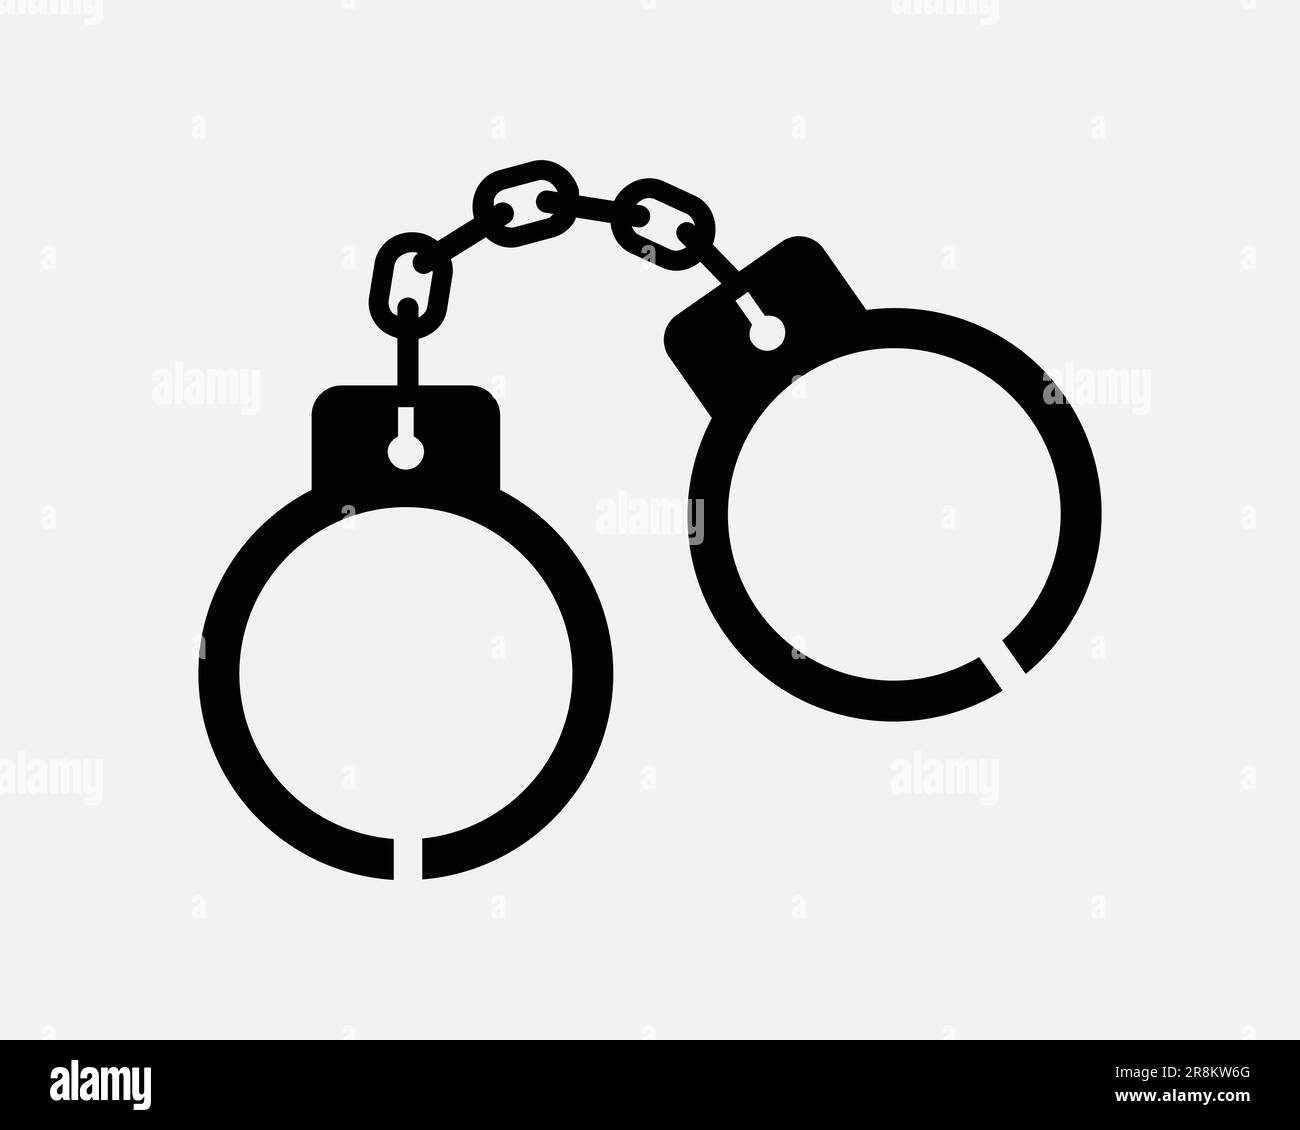 Handcuffs Icon. Arrest Criminal Crime Jail Prison Justice Slave Slavery Trap Punish Police Black White Sign Symbol Artwork Graphic Clipart EPS Vector Stock Vector